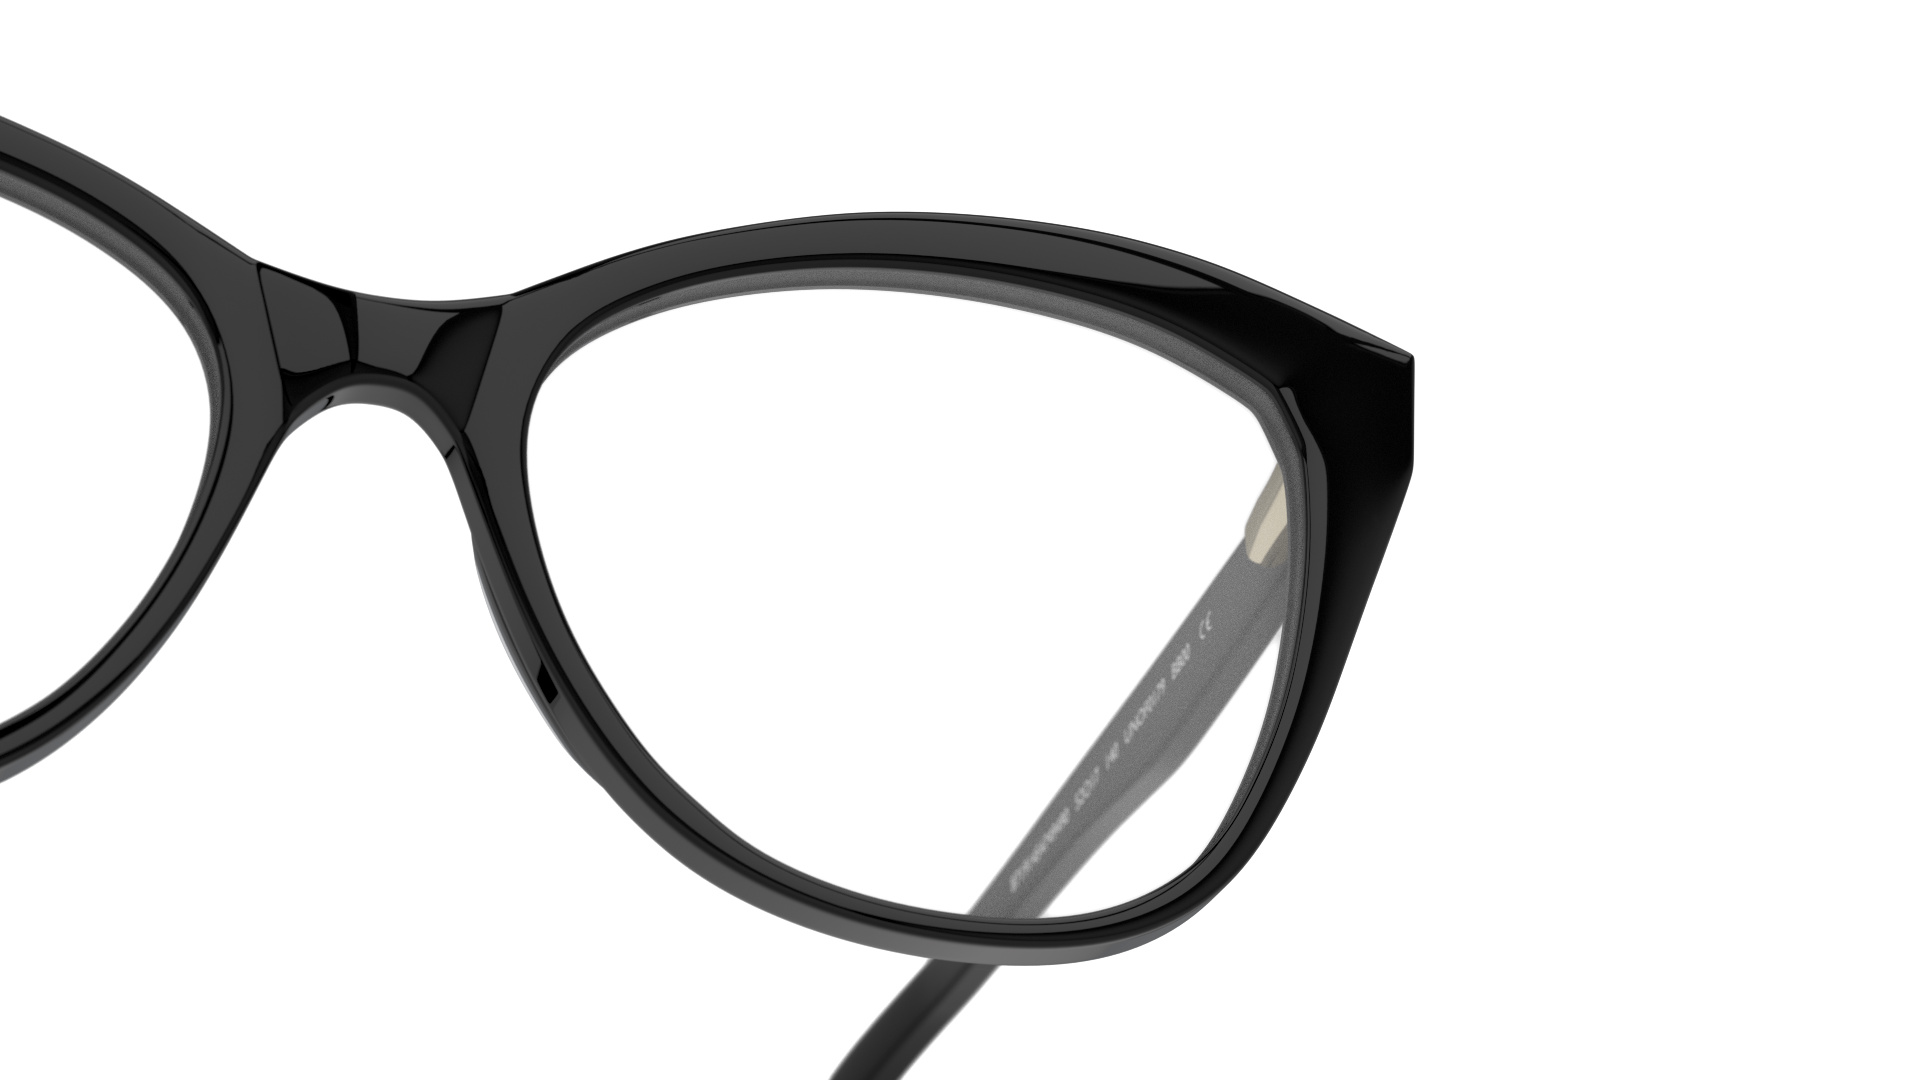 Detail01 Unofficial UNOF0179 (BB00) Glasses Transparent / Black